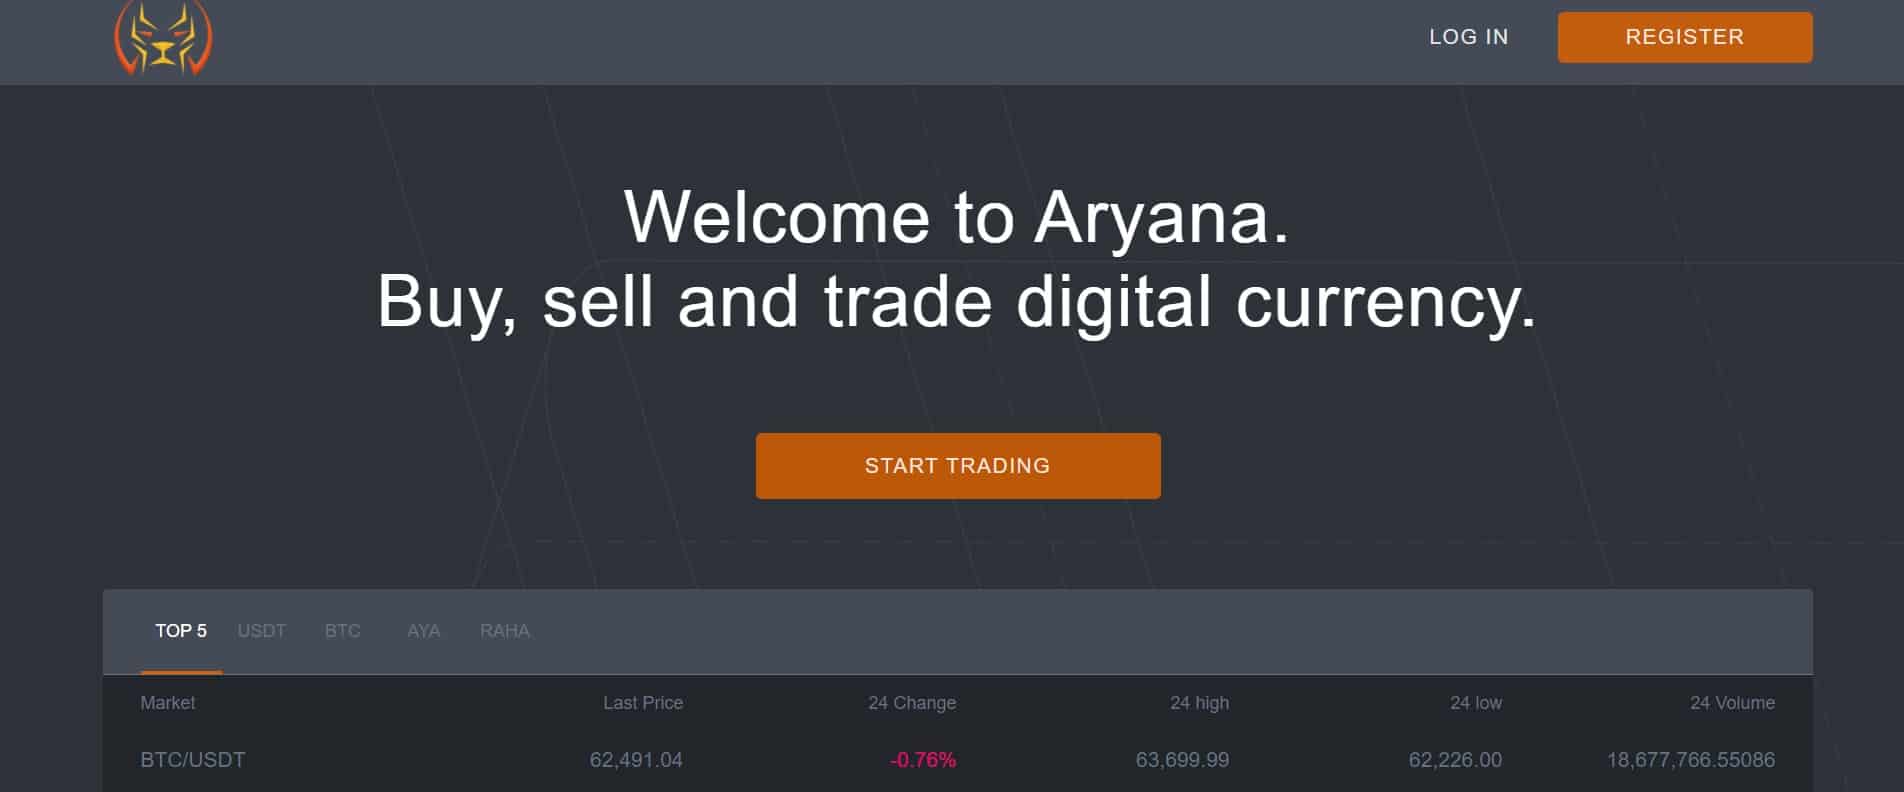 Aryana website